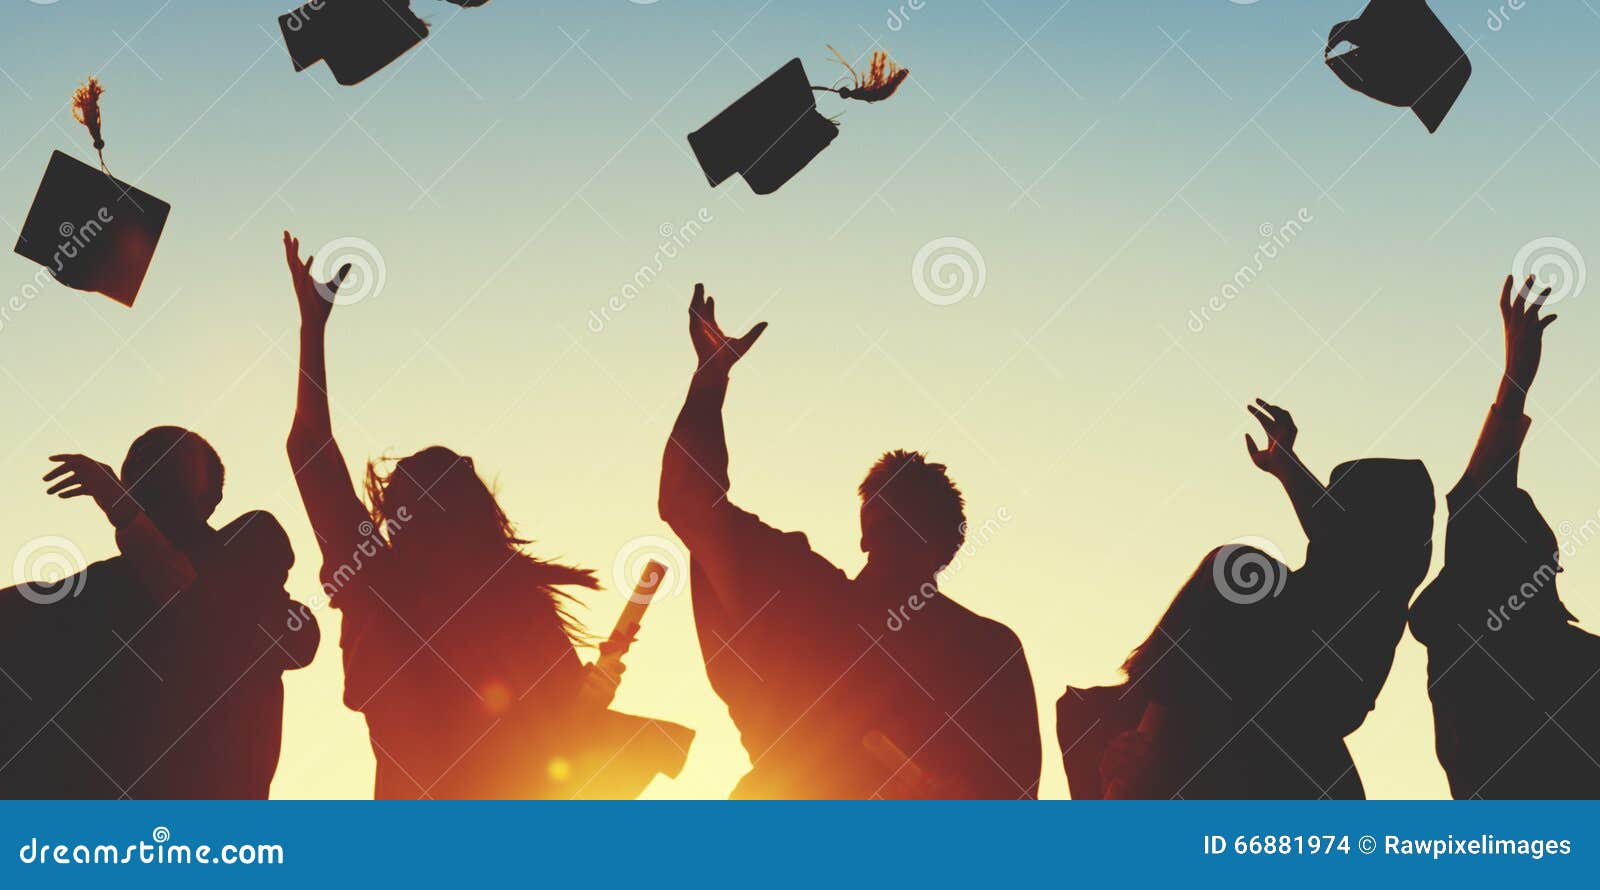 celebration education graduation student success learning concept